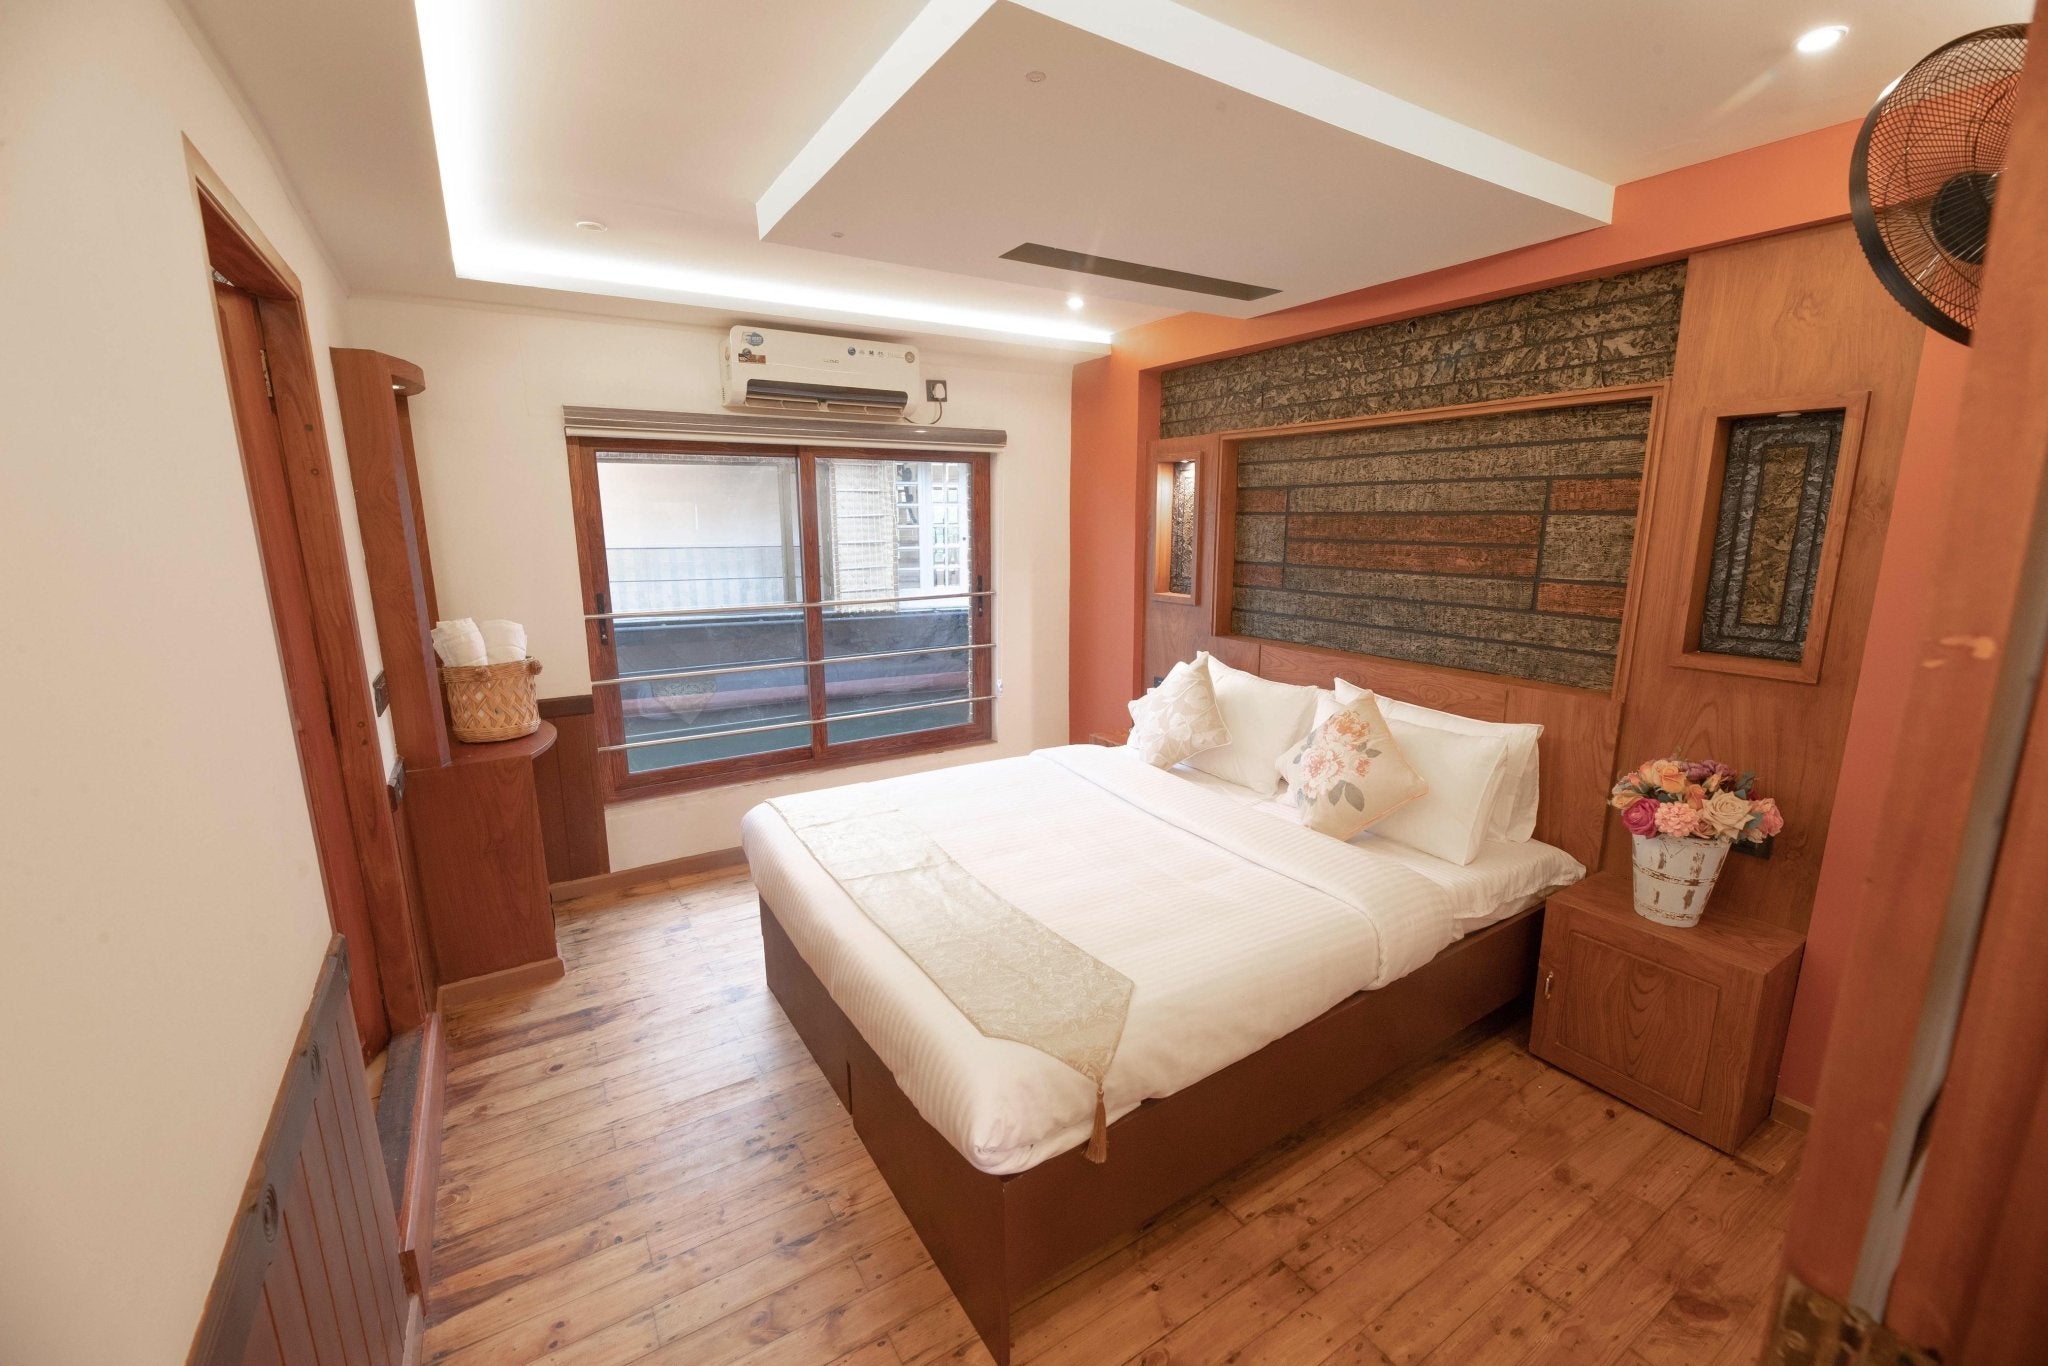 3 Bedroom Houseboats in Alleppey Kerala.